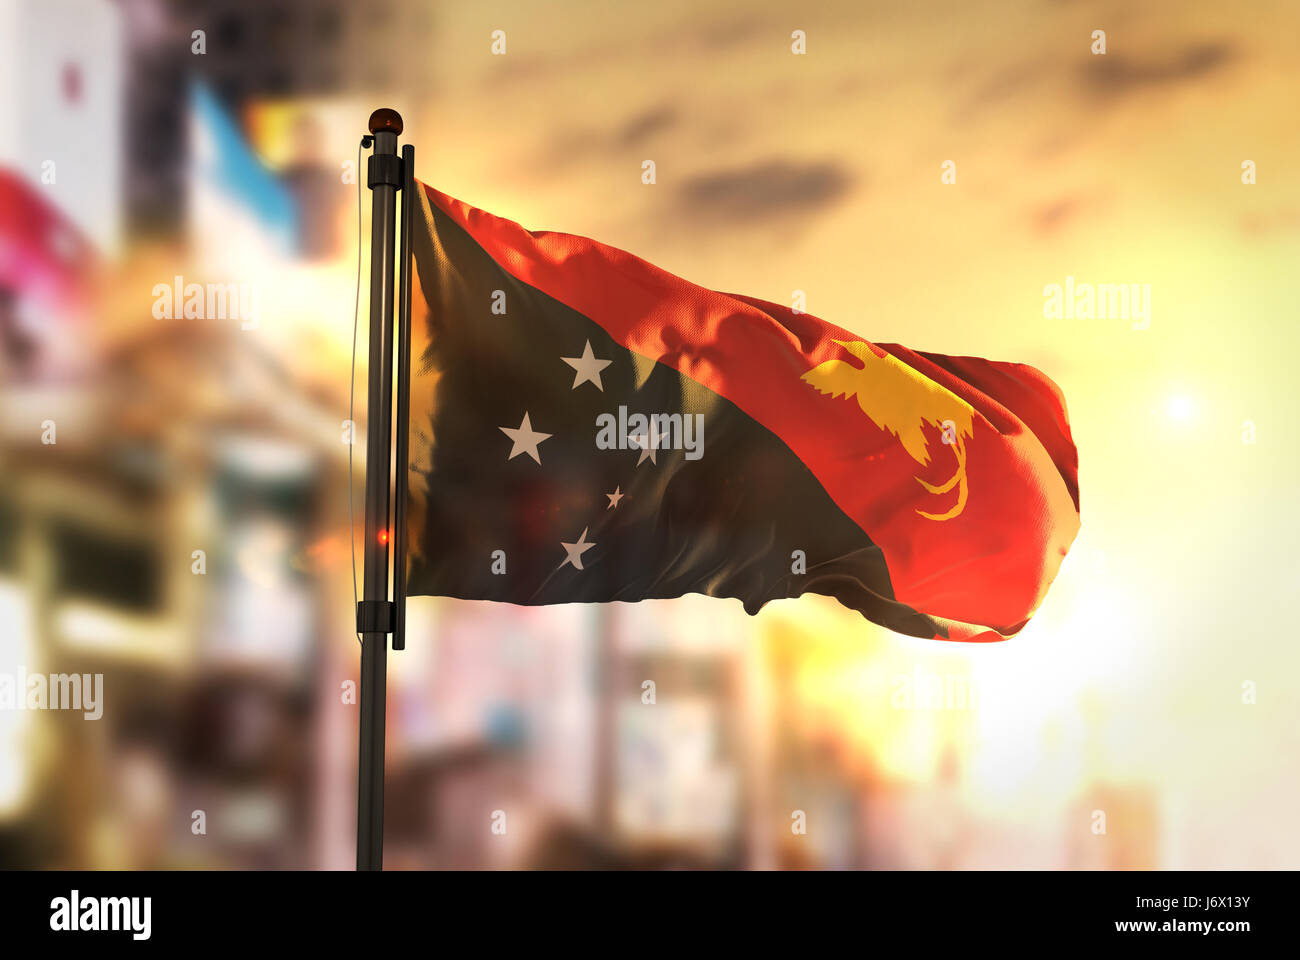 Papua-Neu-Guinea Fahne gegen City unscharf Hintergrund bei Sonnenaufgang Hintergrundbeleuchtung Stockfoto